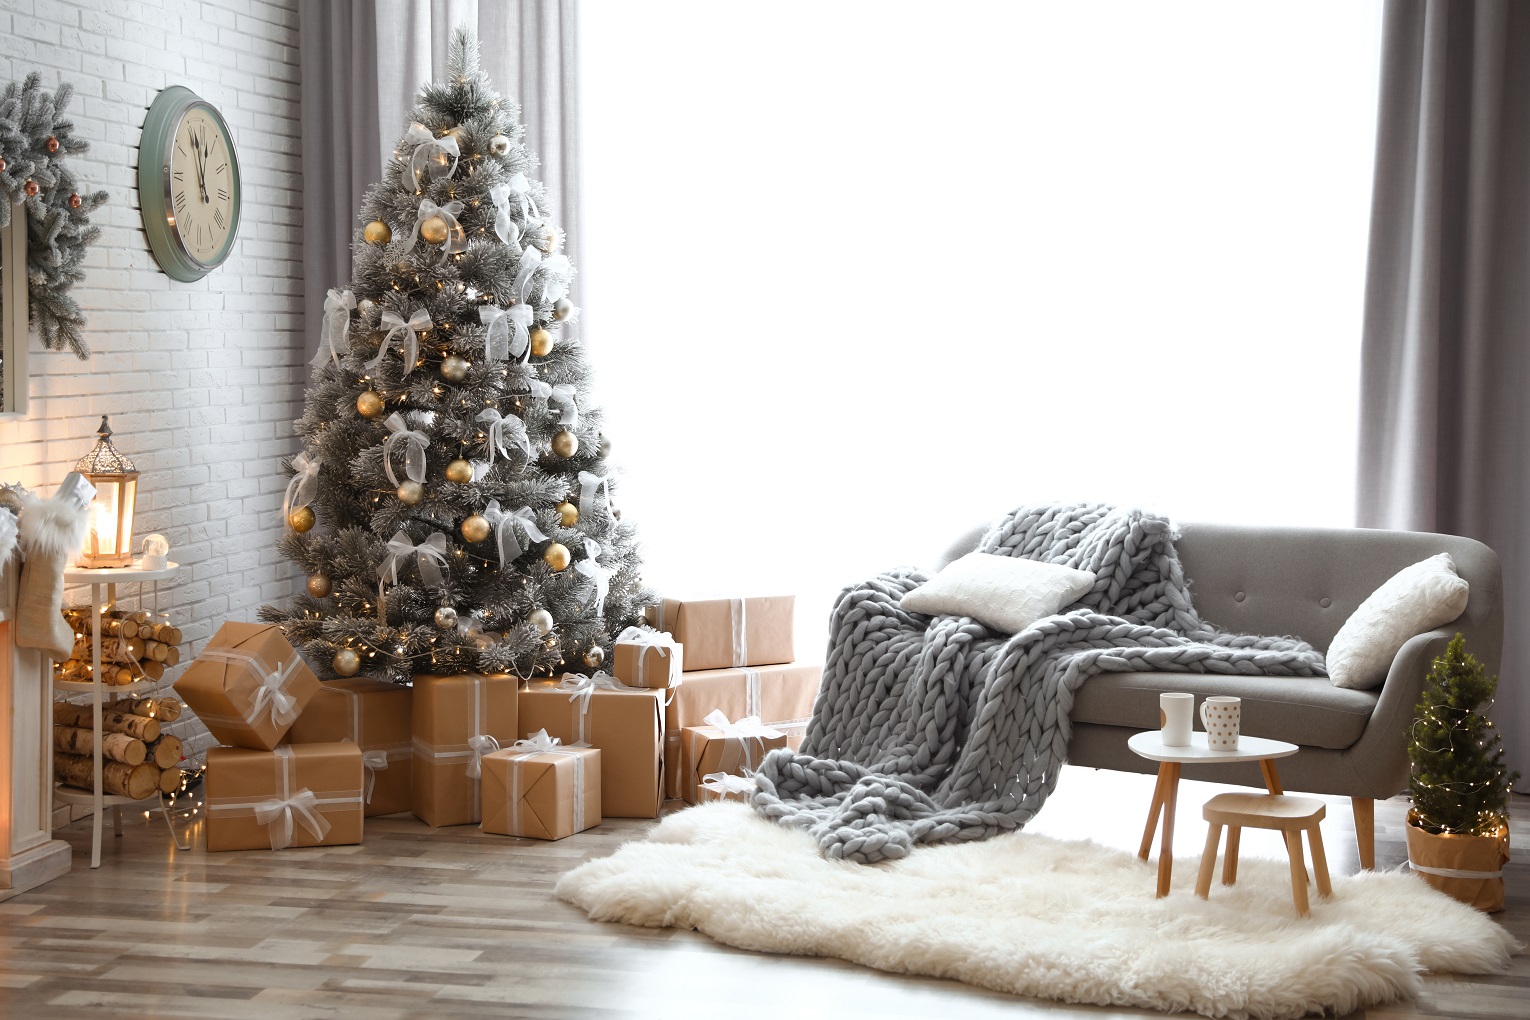 seasonal decorating ideas stylish interior of living room with decorated Christmas tree